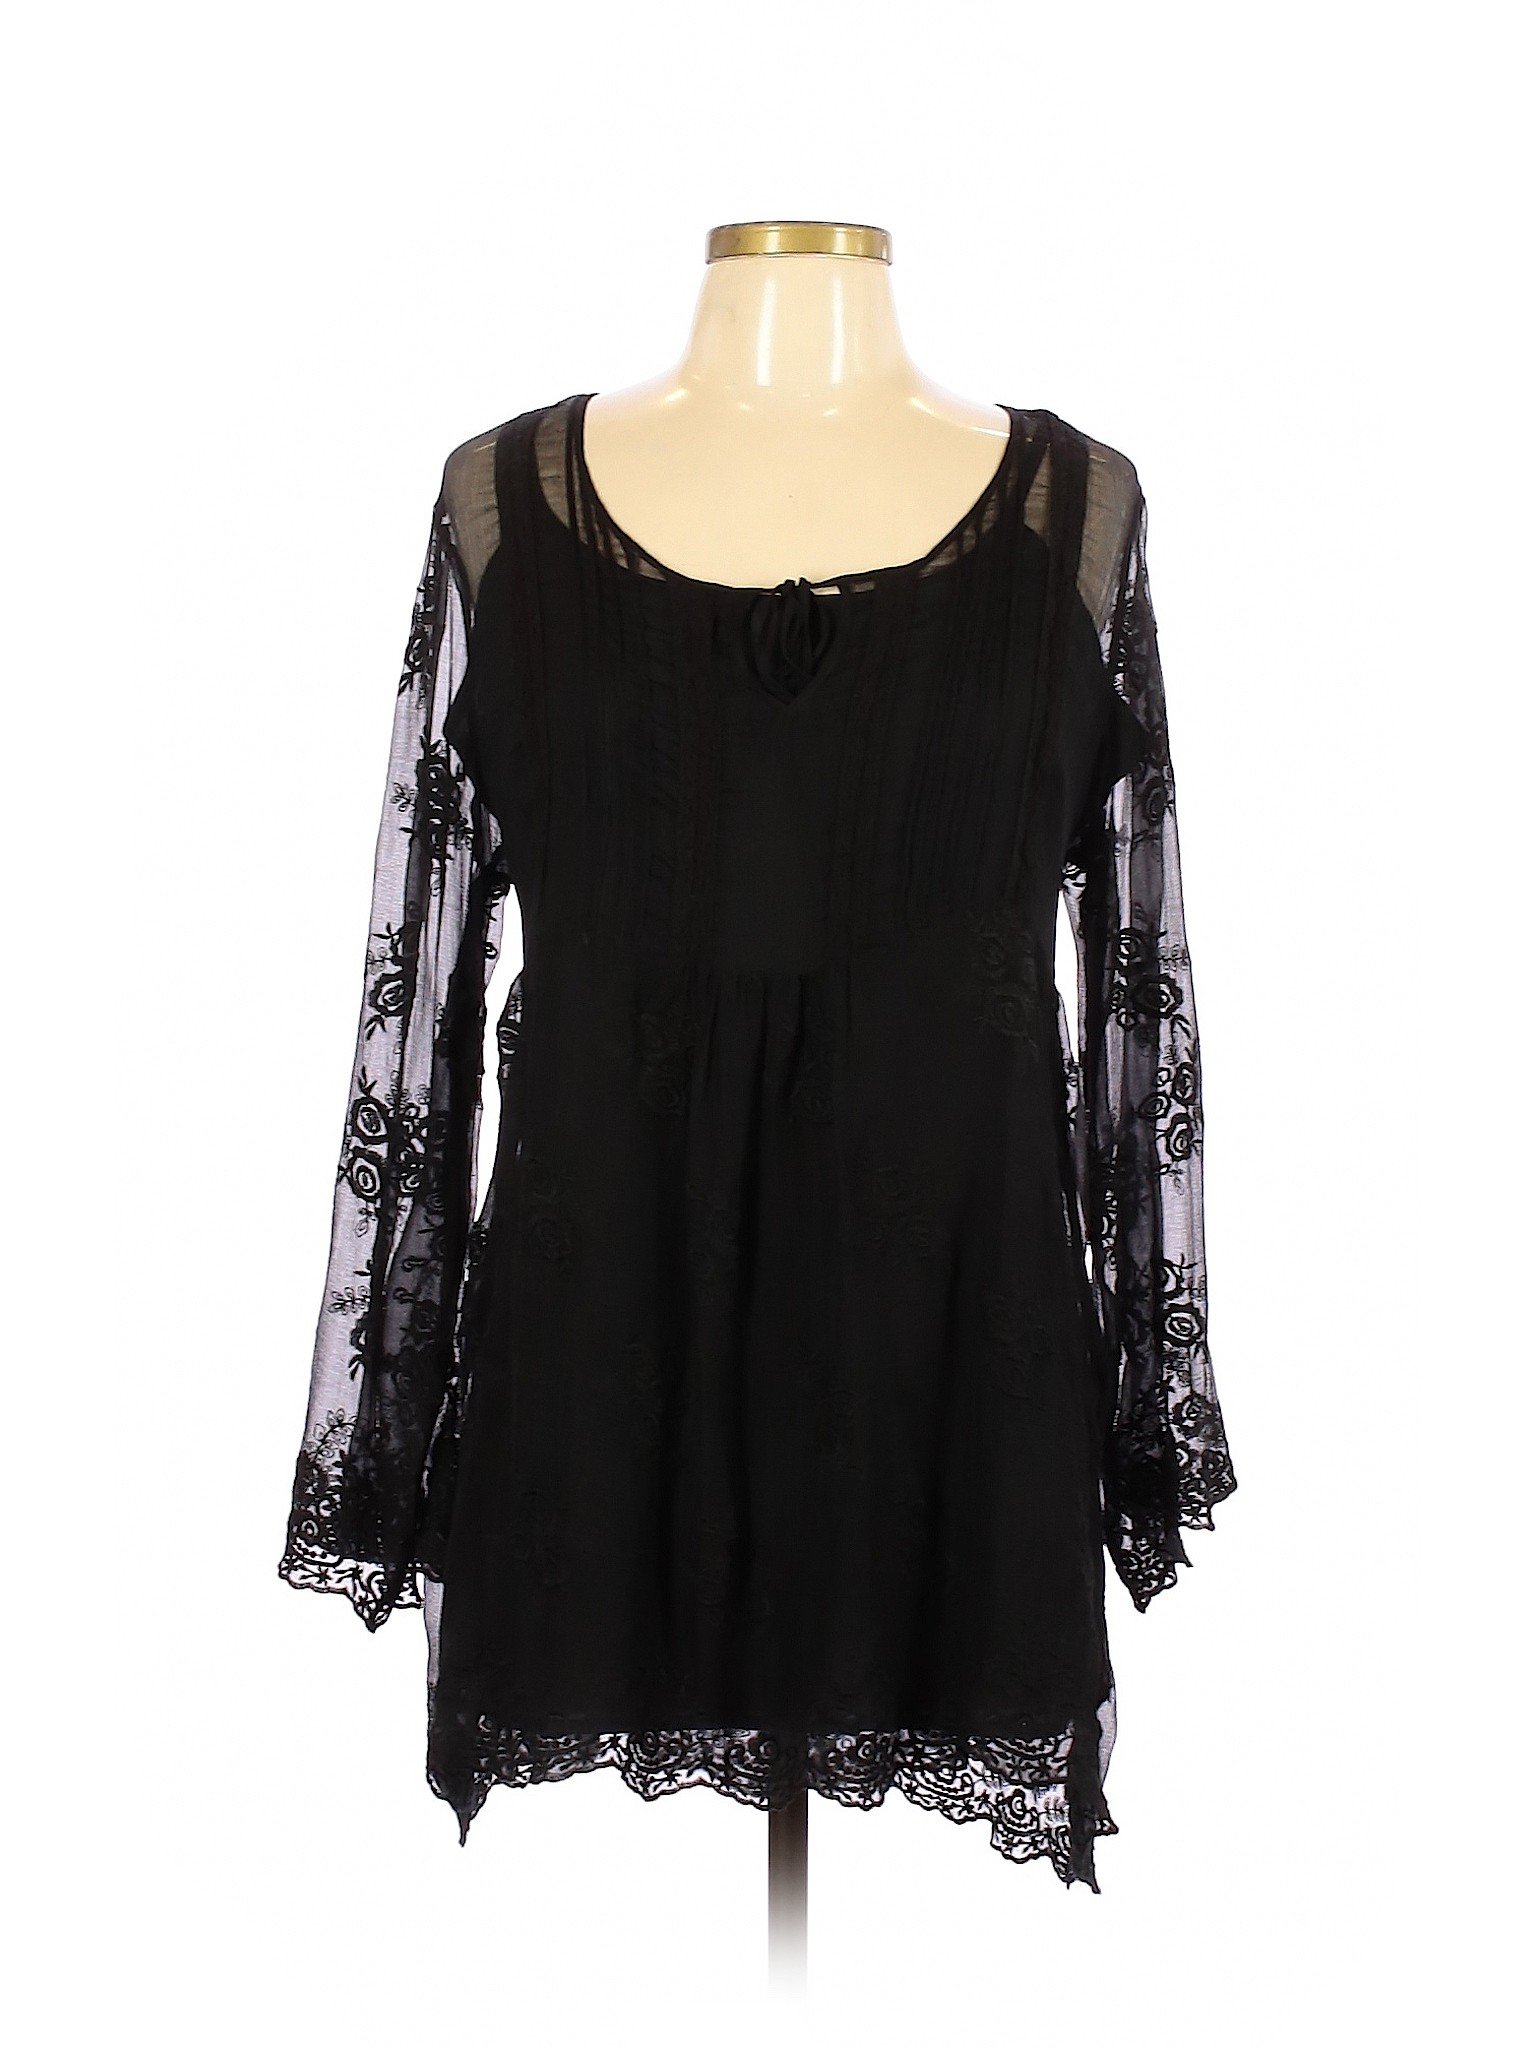 Soft Surroundings Women Black Long Sleeve Silk Top L | eBay